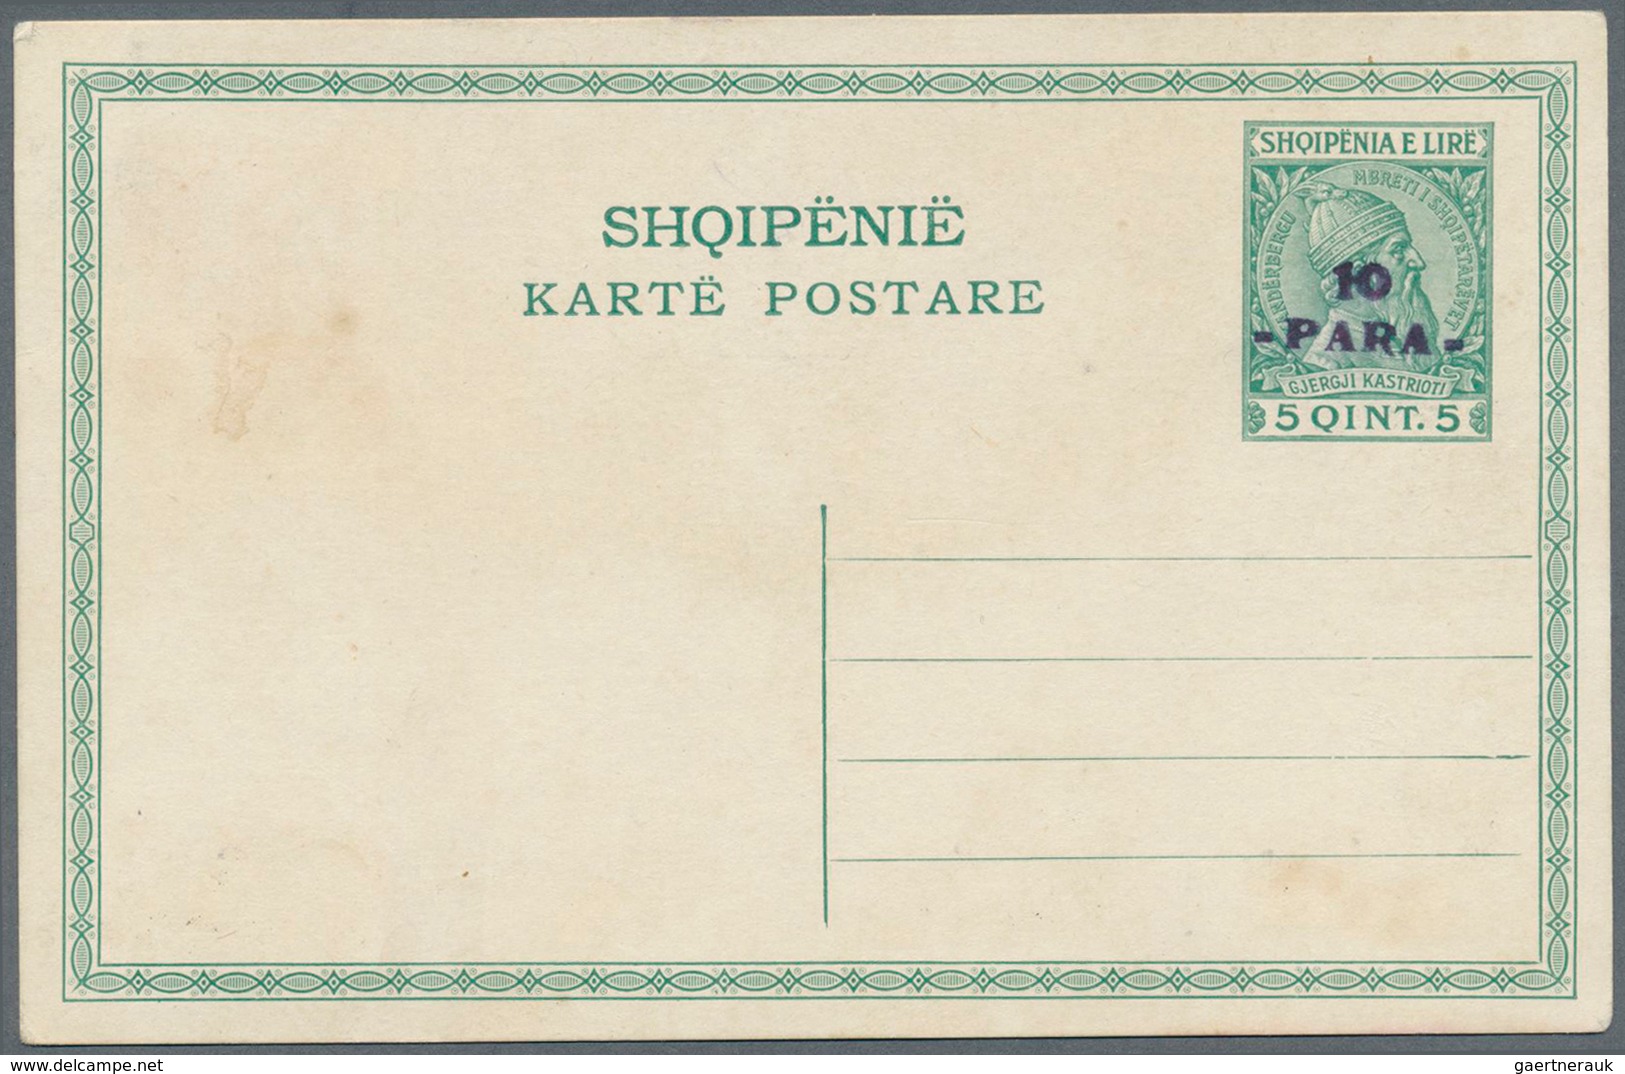 Albanien - Ganzsachen: 1914, 10 PARA On 5q. Green, Stationery Card, Unused, Few Small Stains. - Albanien